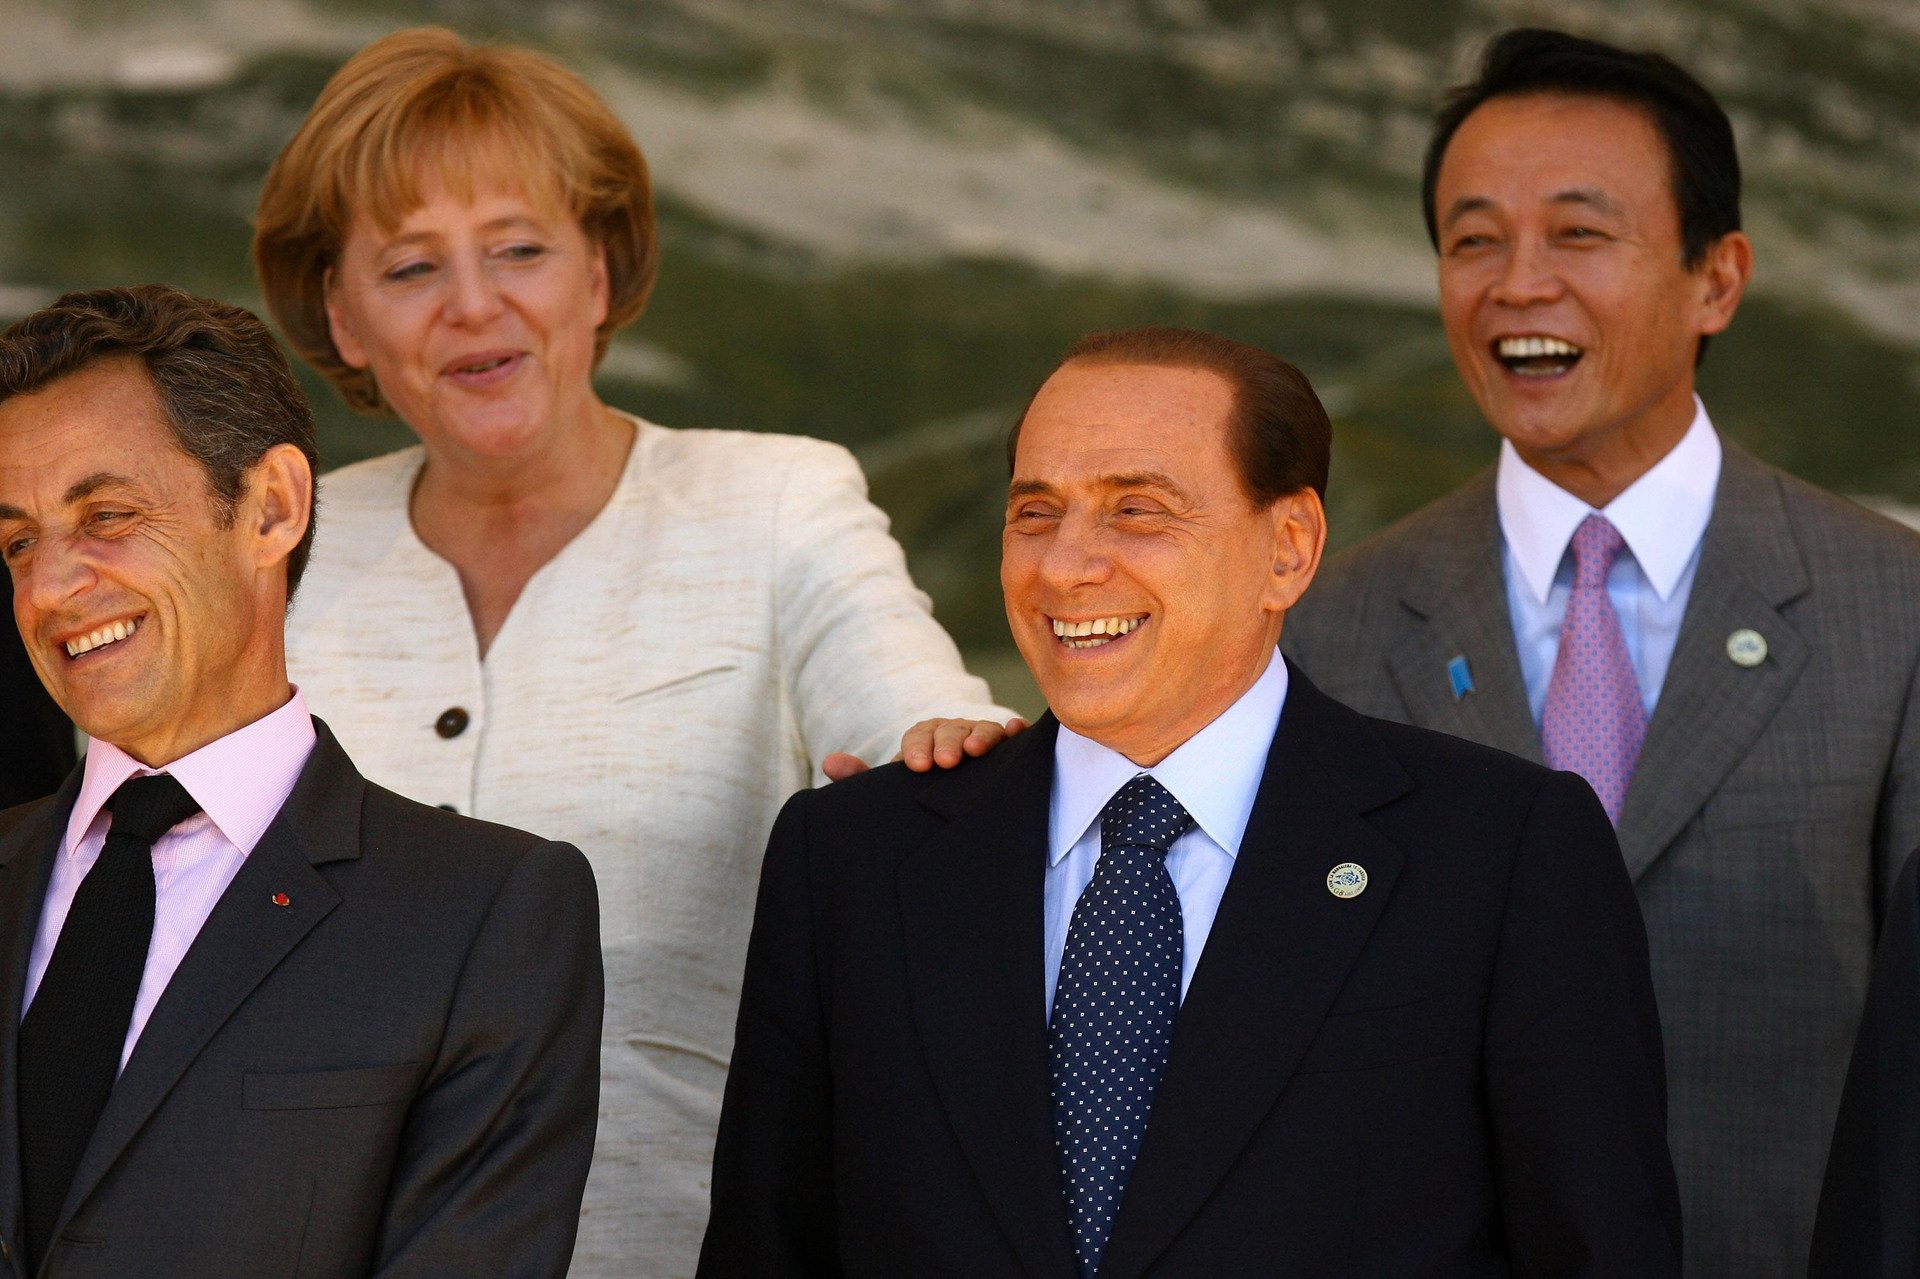 Silvio Berlusconi with fellow G8 leaders in 2009.